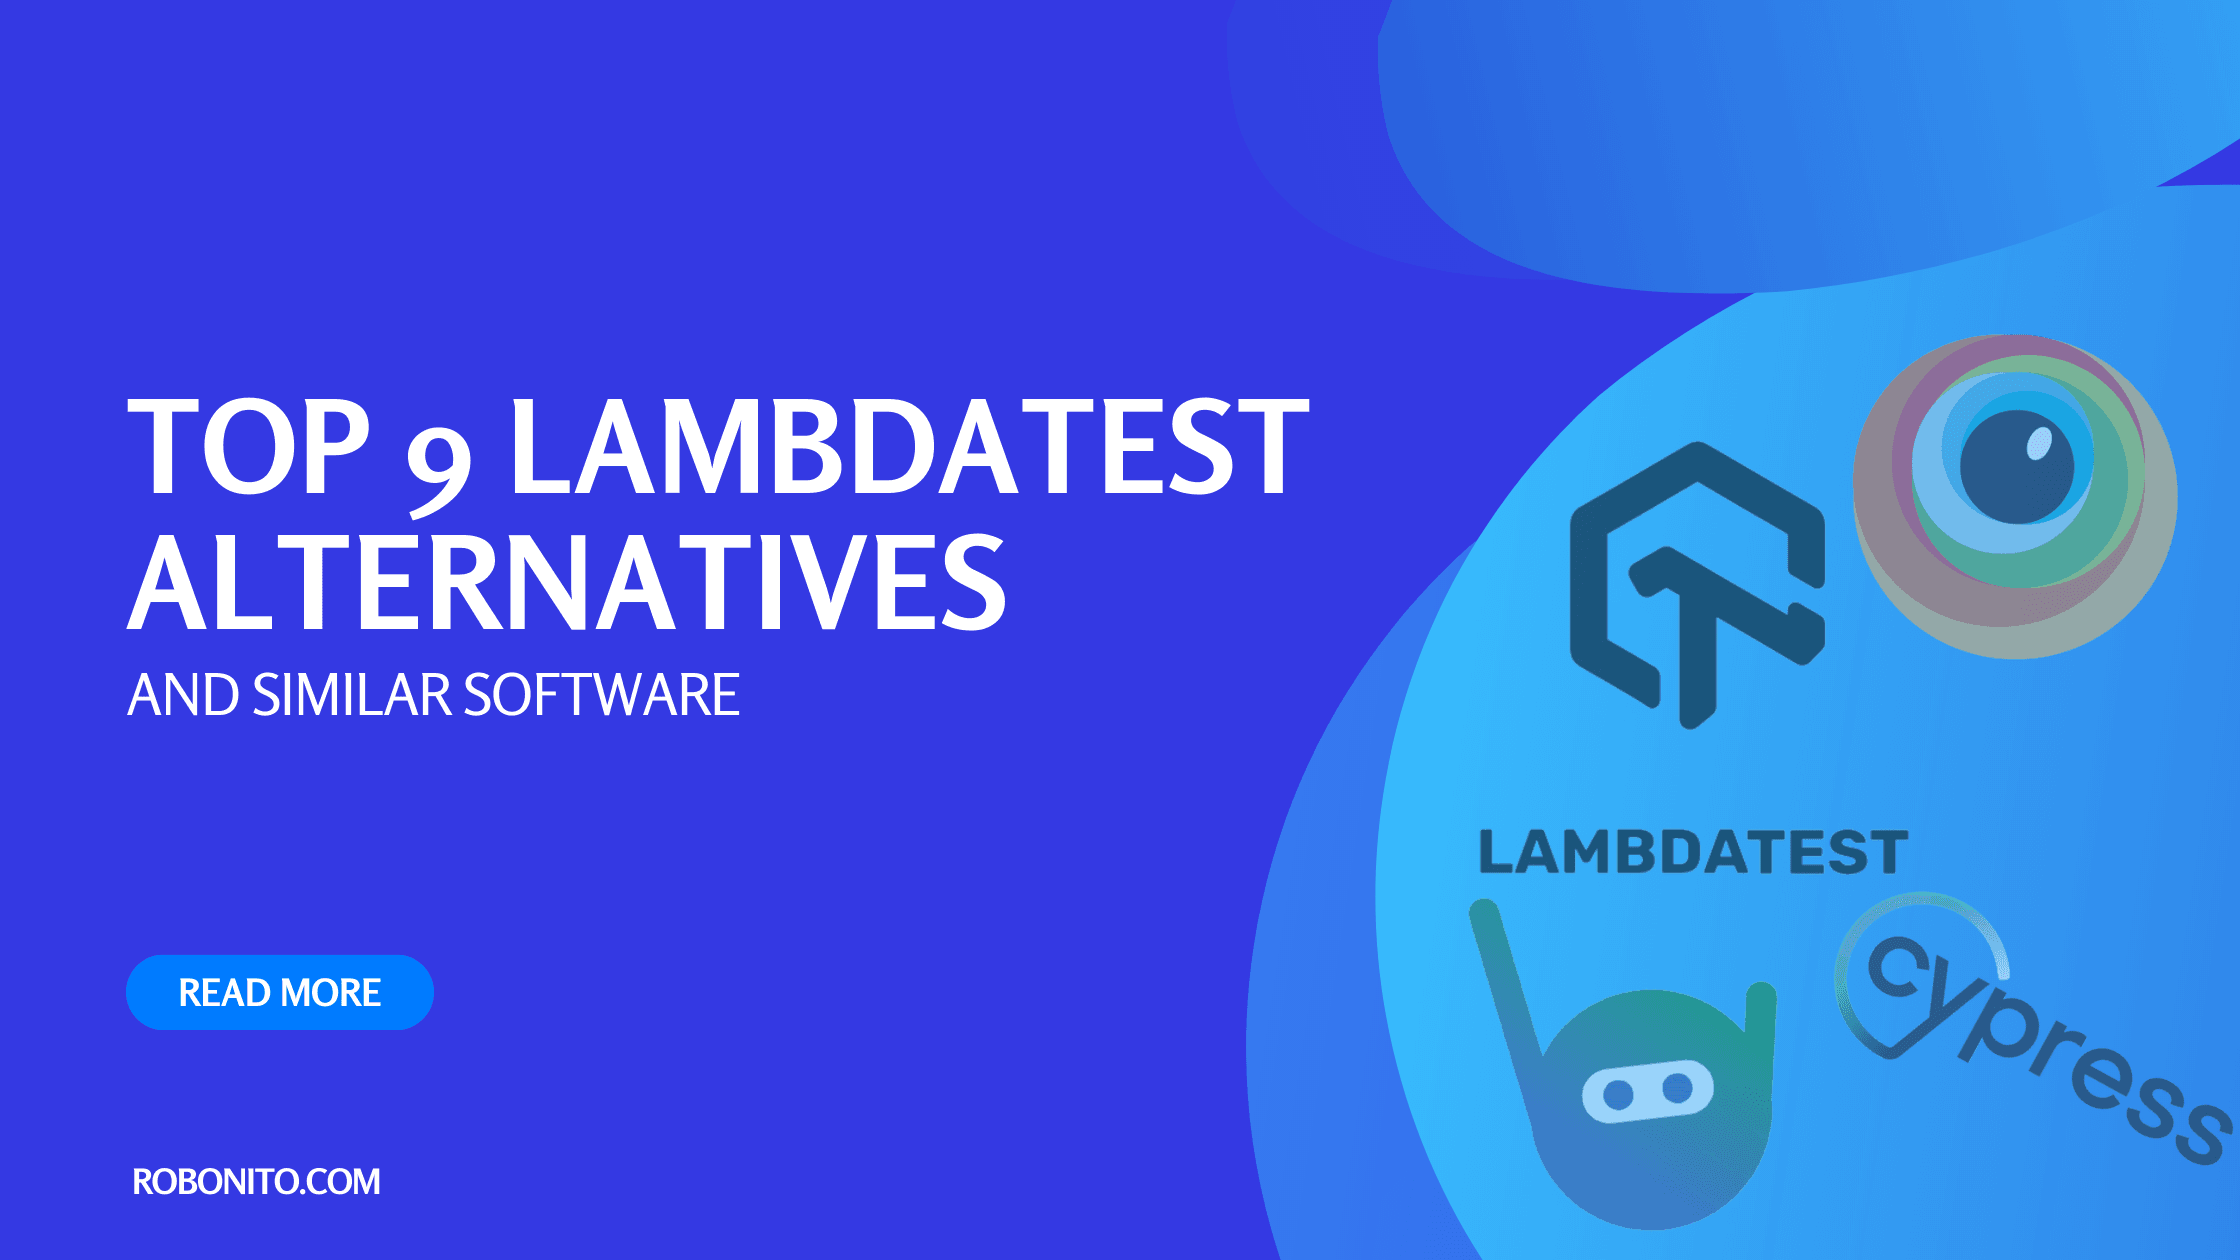 Top 9 LambdaTest Alternatives